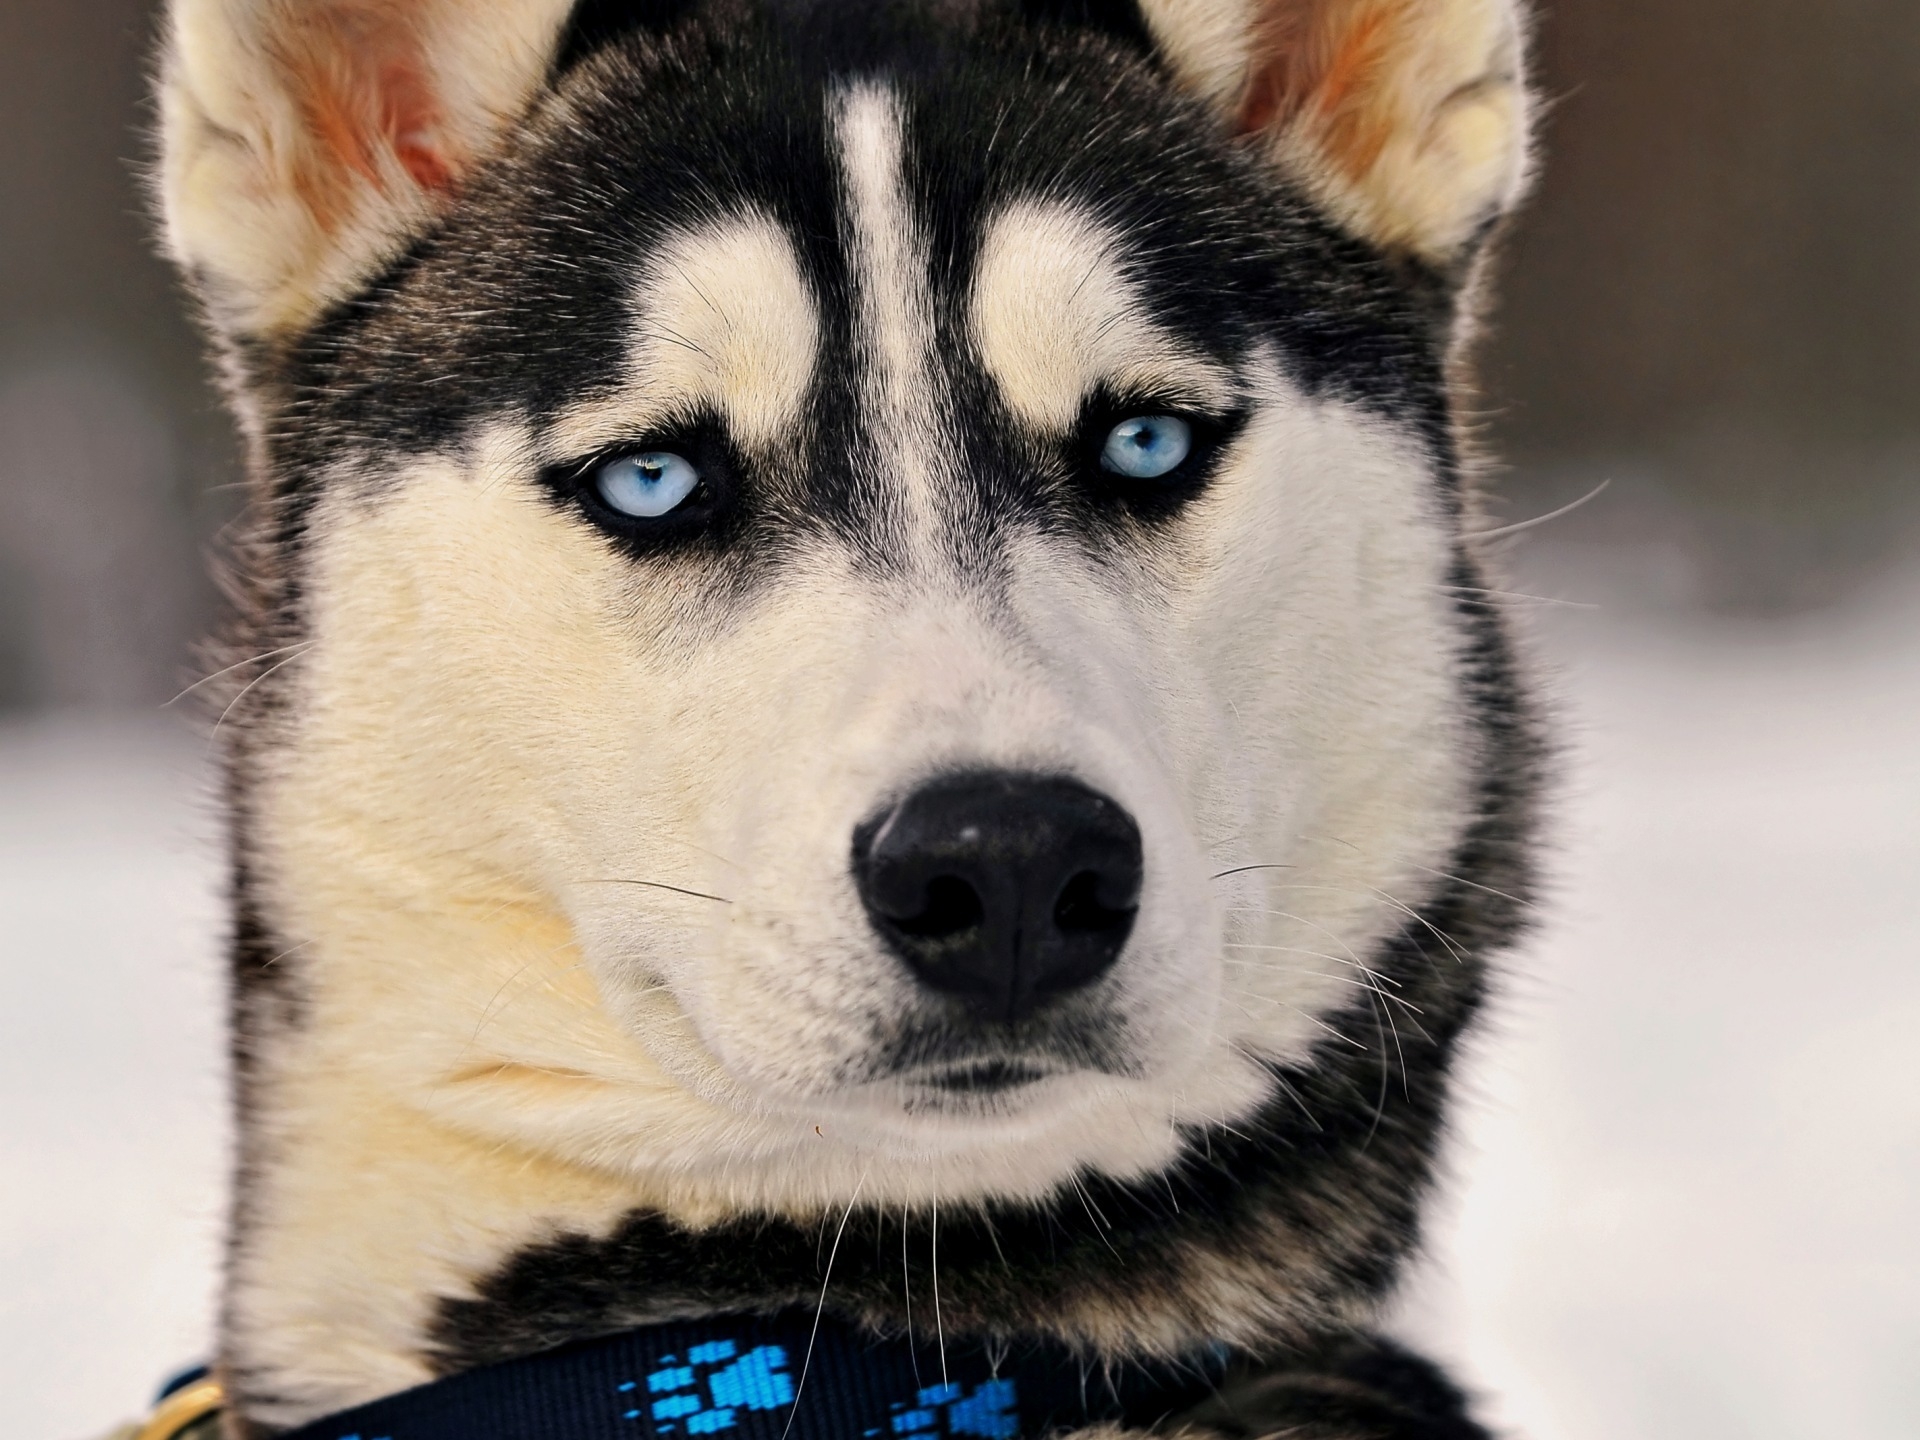 118295 descargar imagen animales, perro, bozal, fornido, ronco, ojos azules, de ojos azules: fondos de pantalla y protectores de pantalla gratis